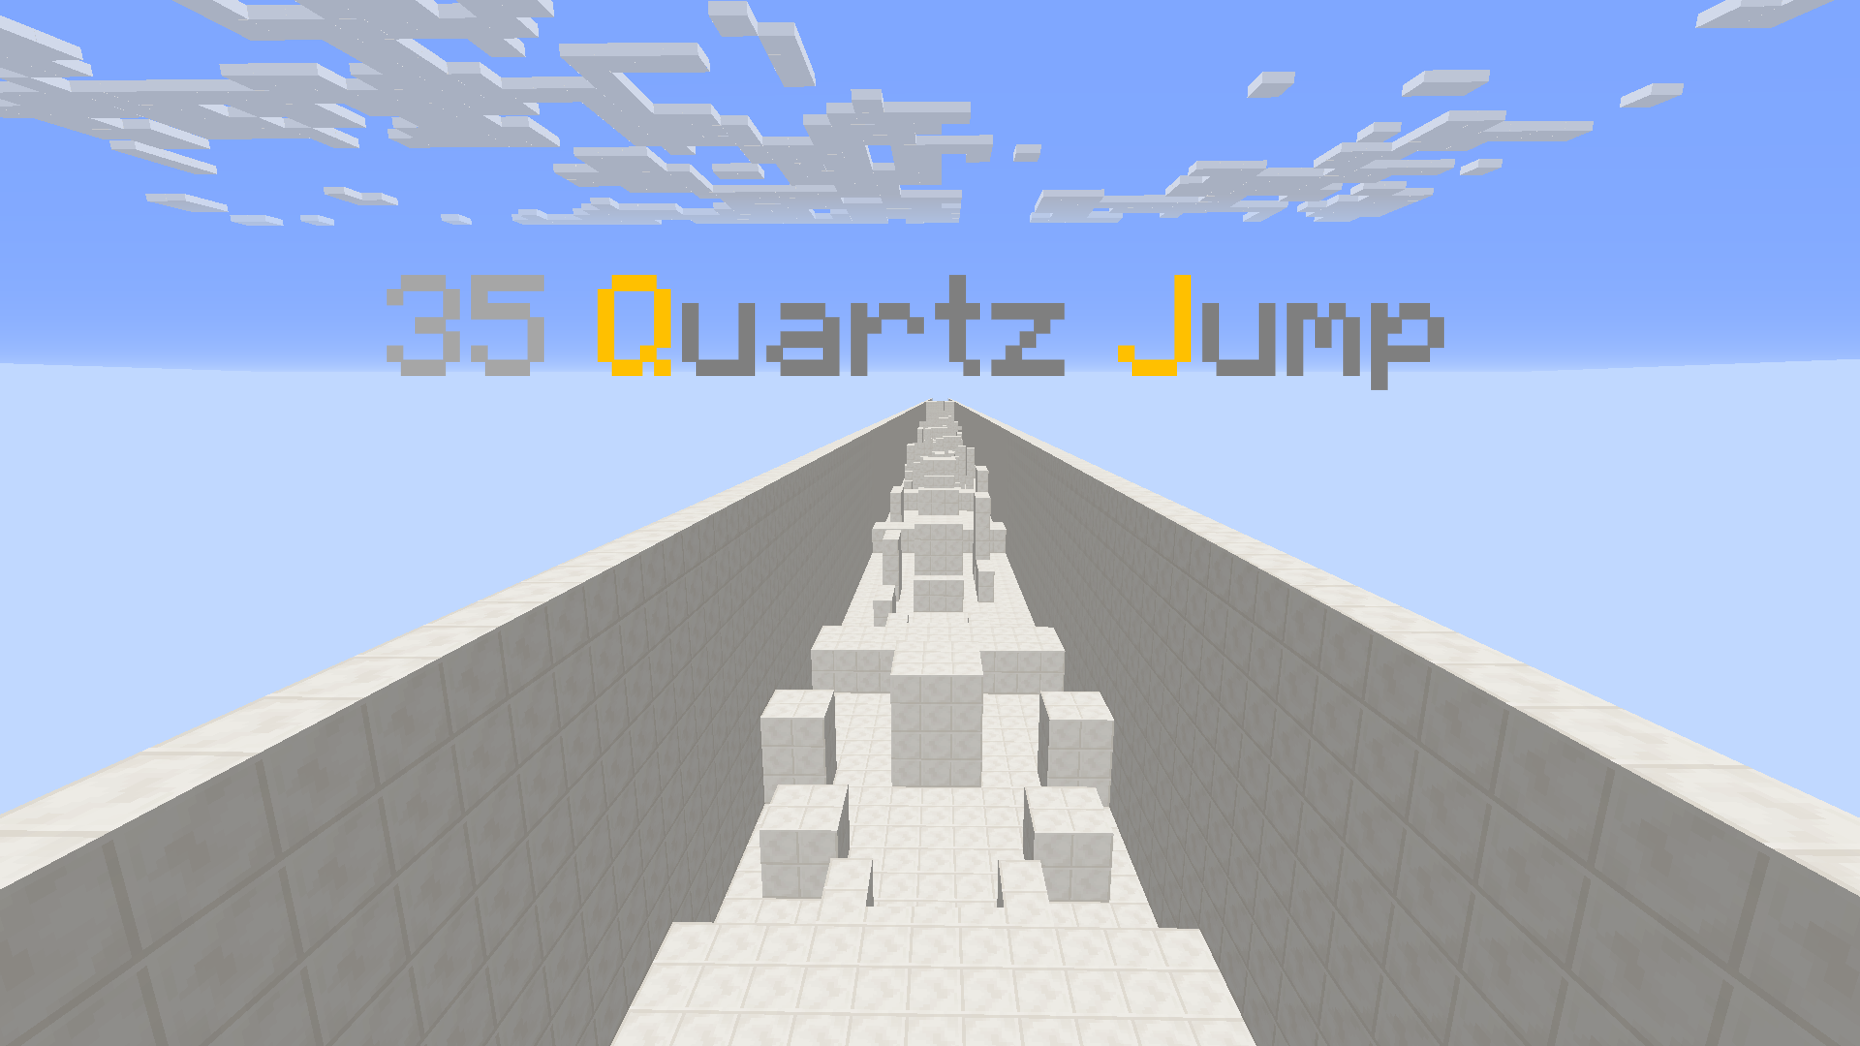 35 quartz jump